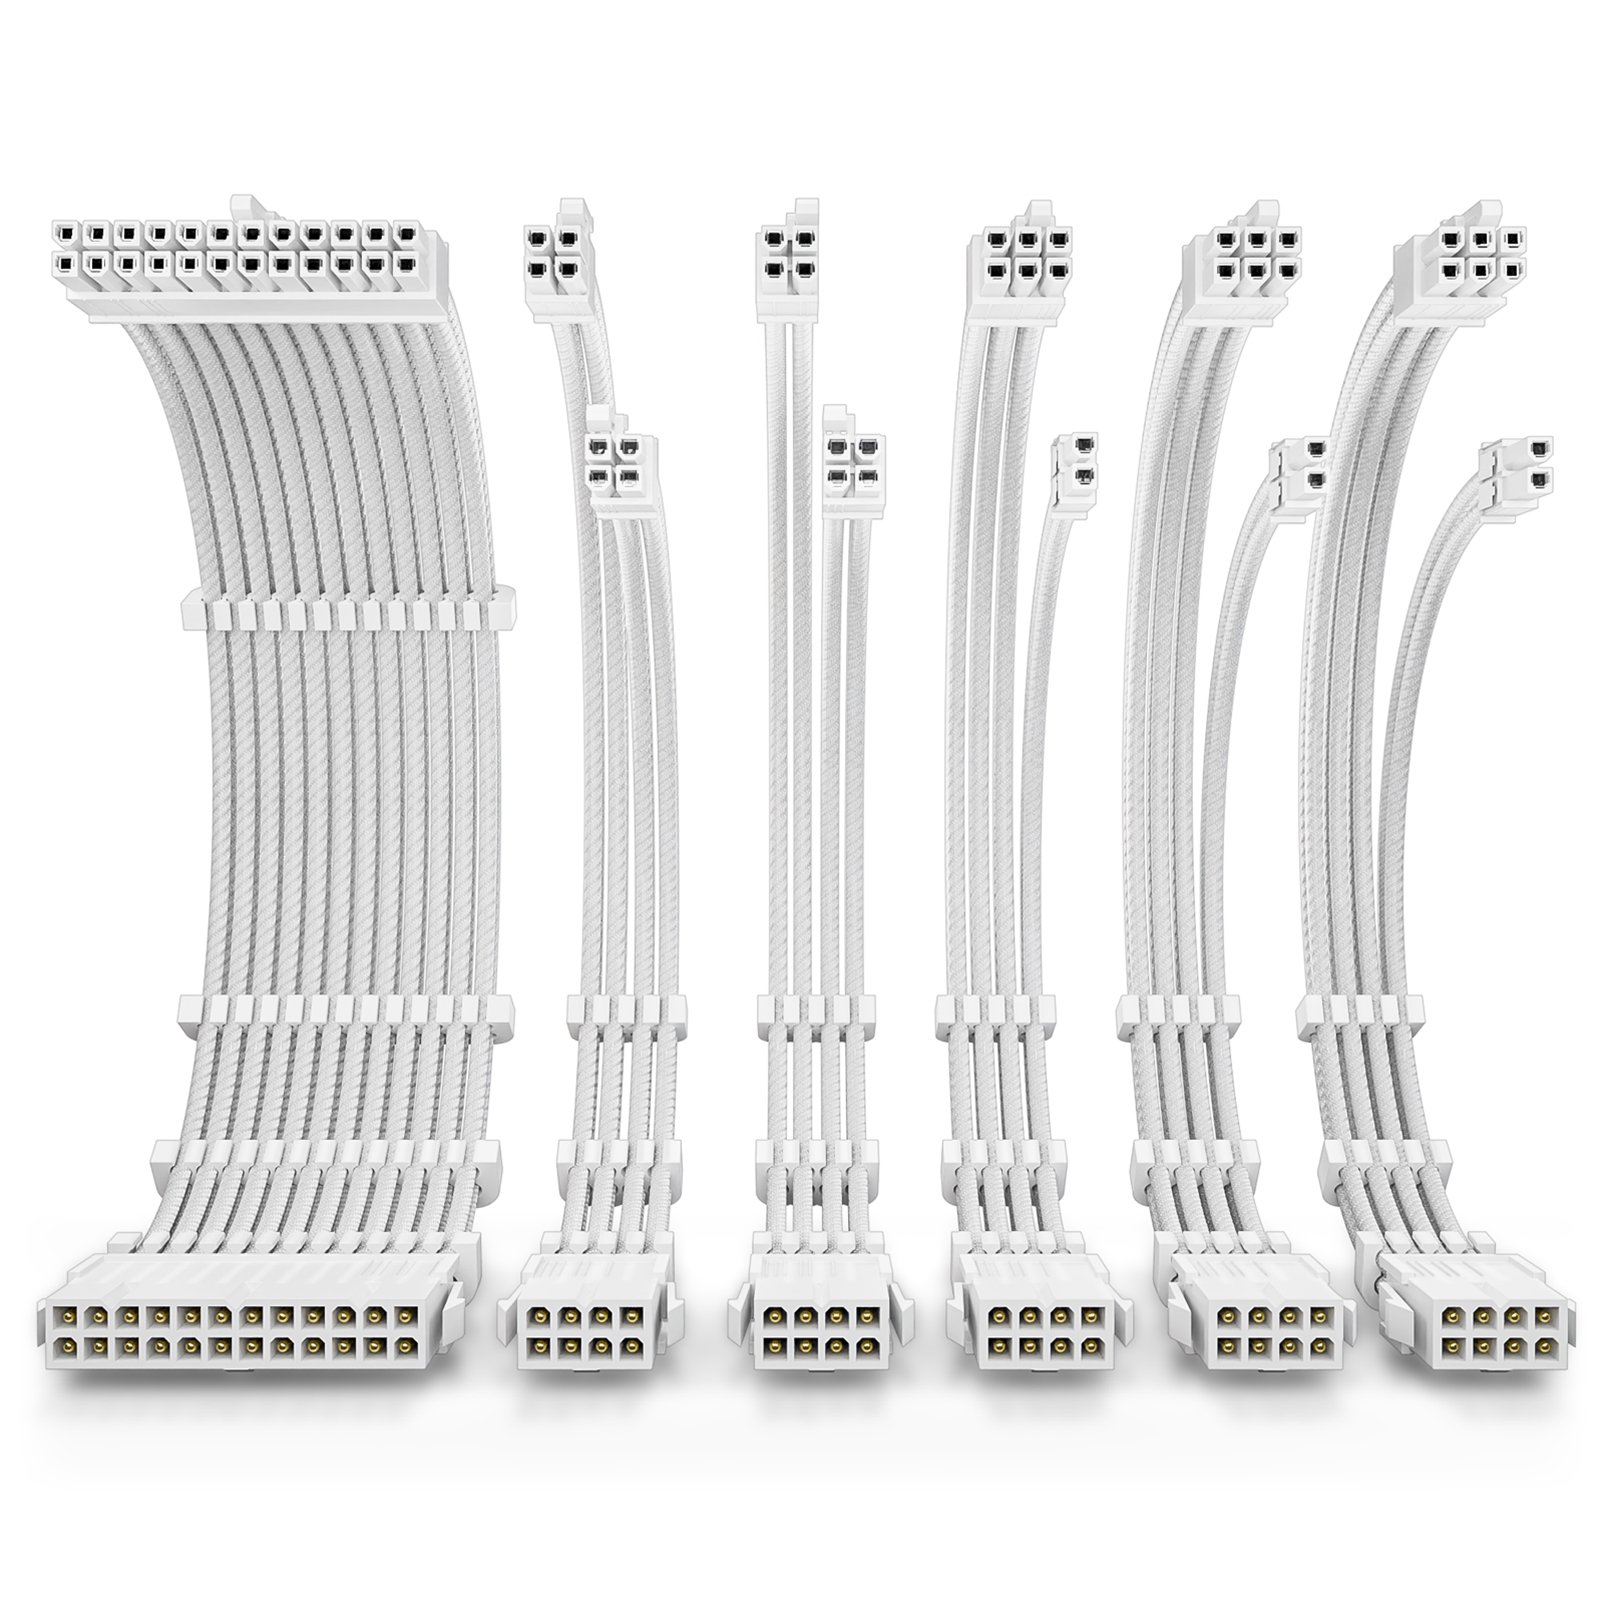 0-761345-77697-4 ANTEC White PSU Extension Cable Kit - 6 Pack (1x 24 Pin, 2x 4+4 Pin, 3x 6+2 Pin)